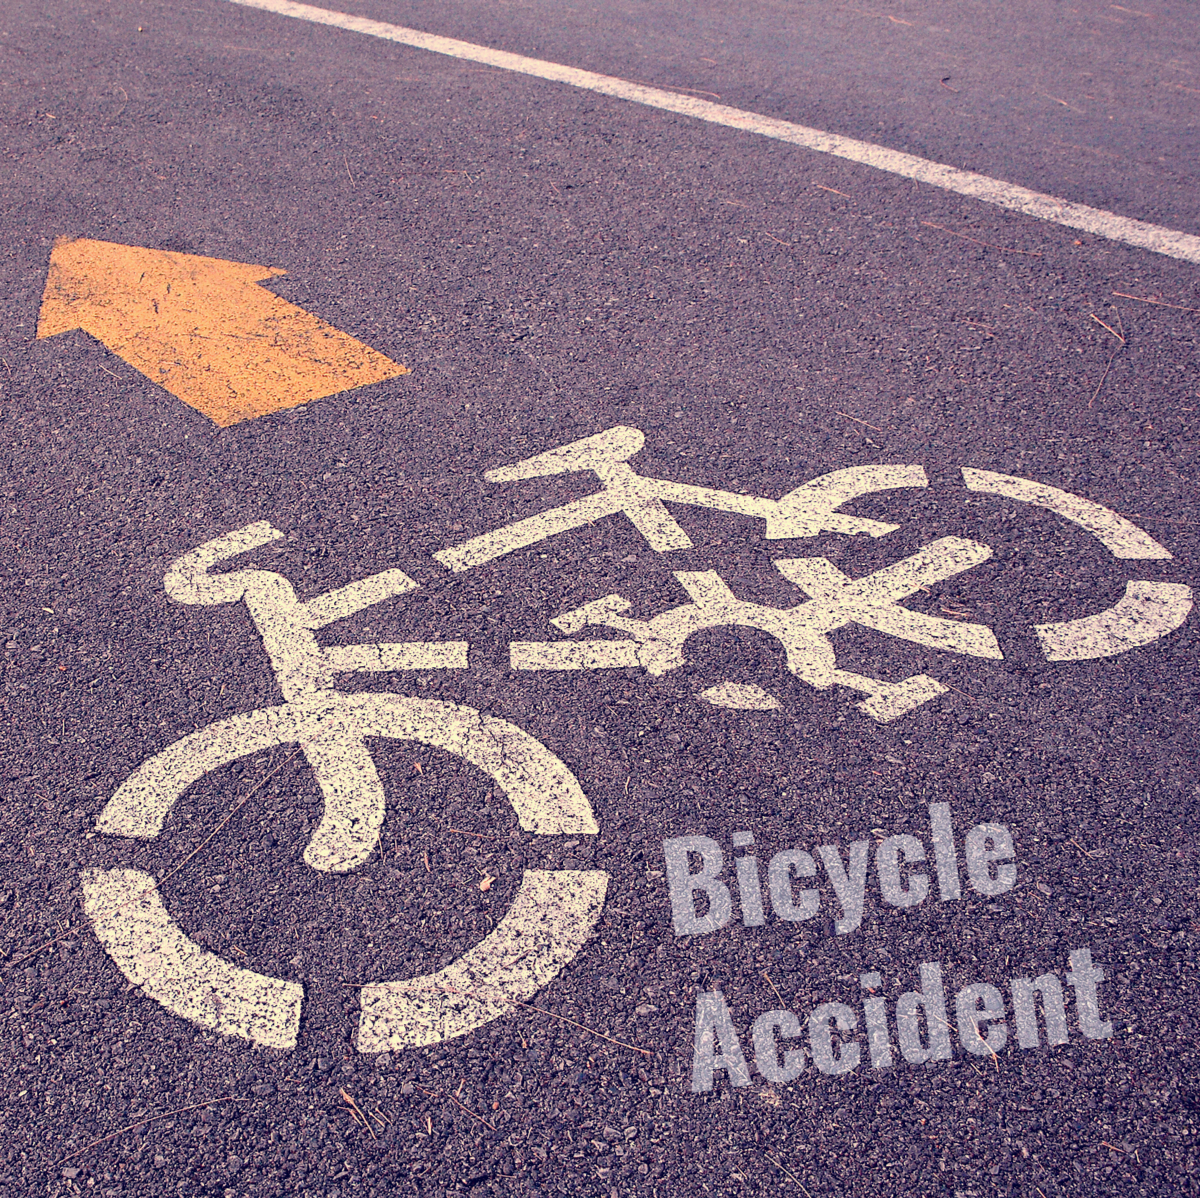 Hesperia Bicycle Accident Escondido Avenue Near Ranchero Road